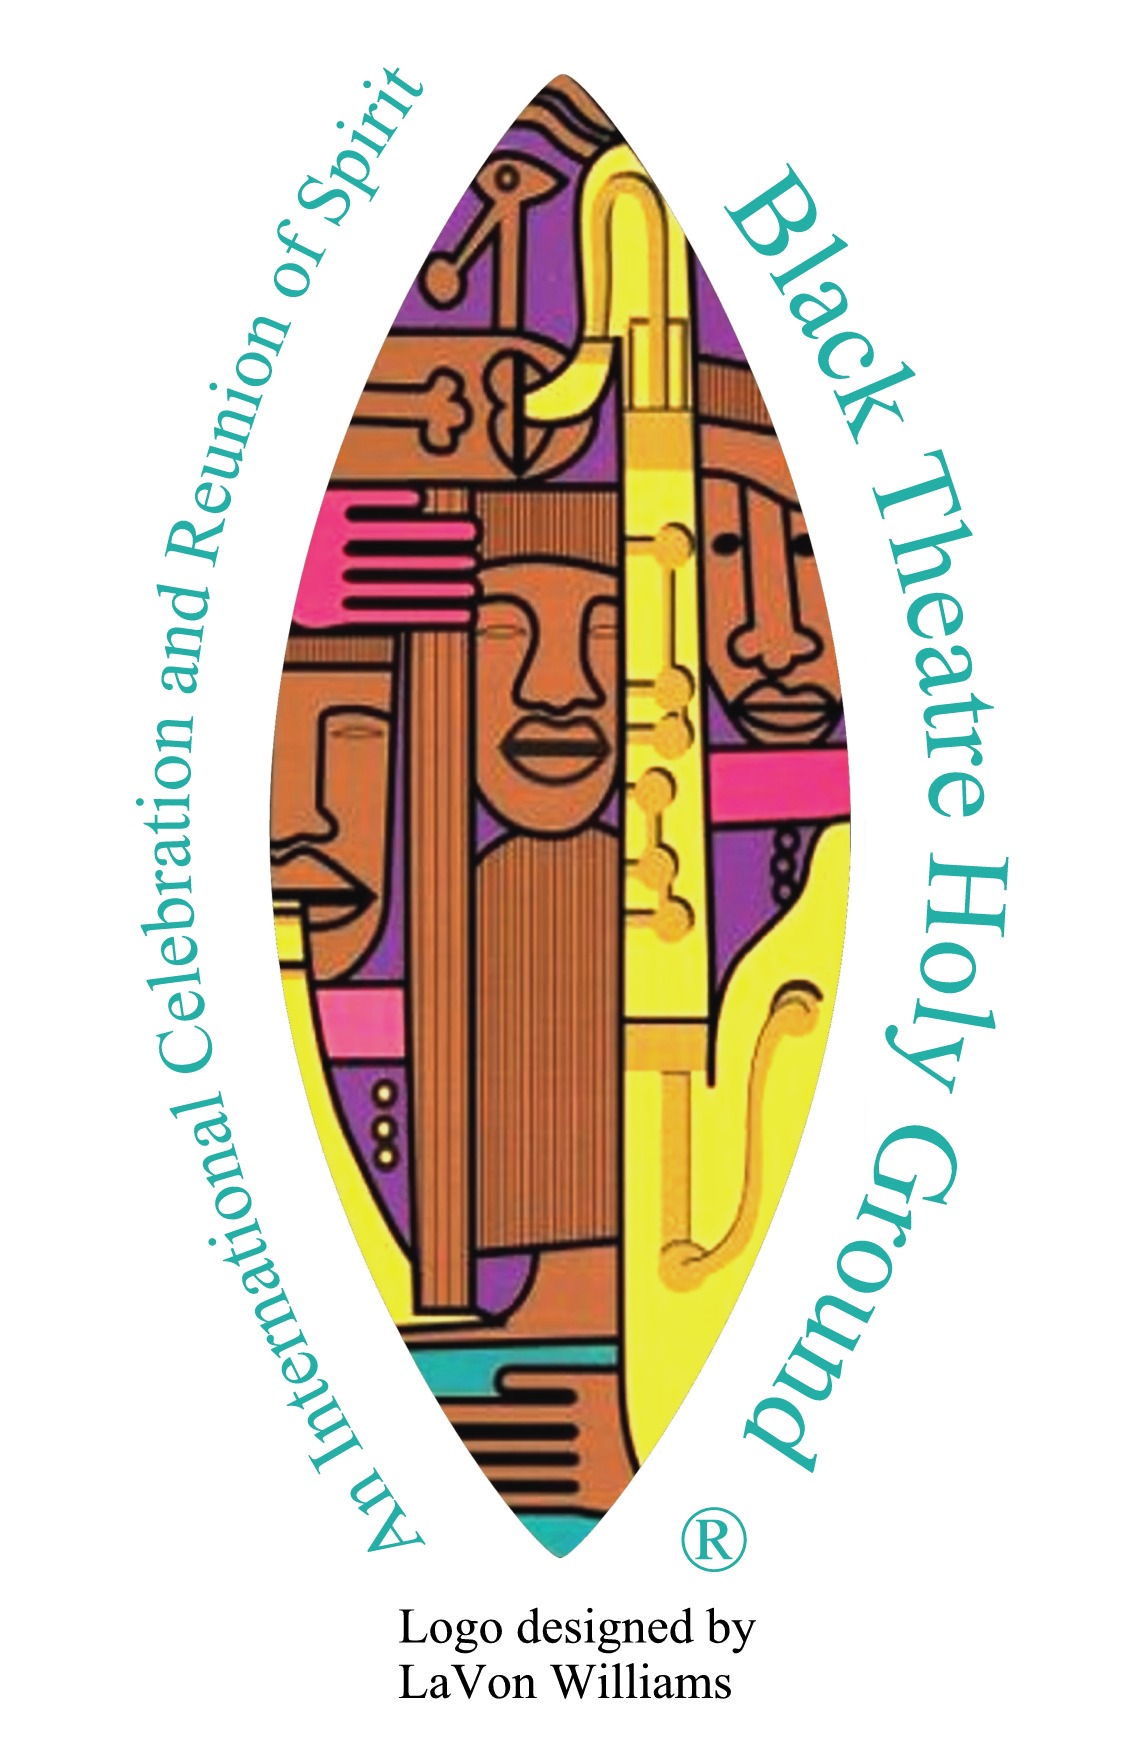 National Black Theatre Festival Logo Pic!